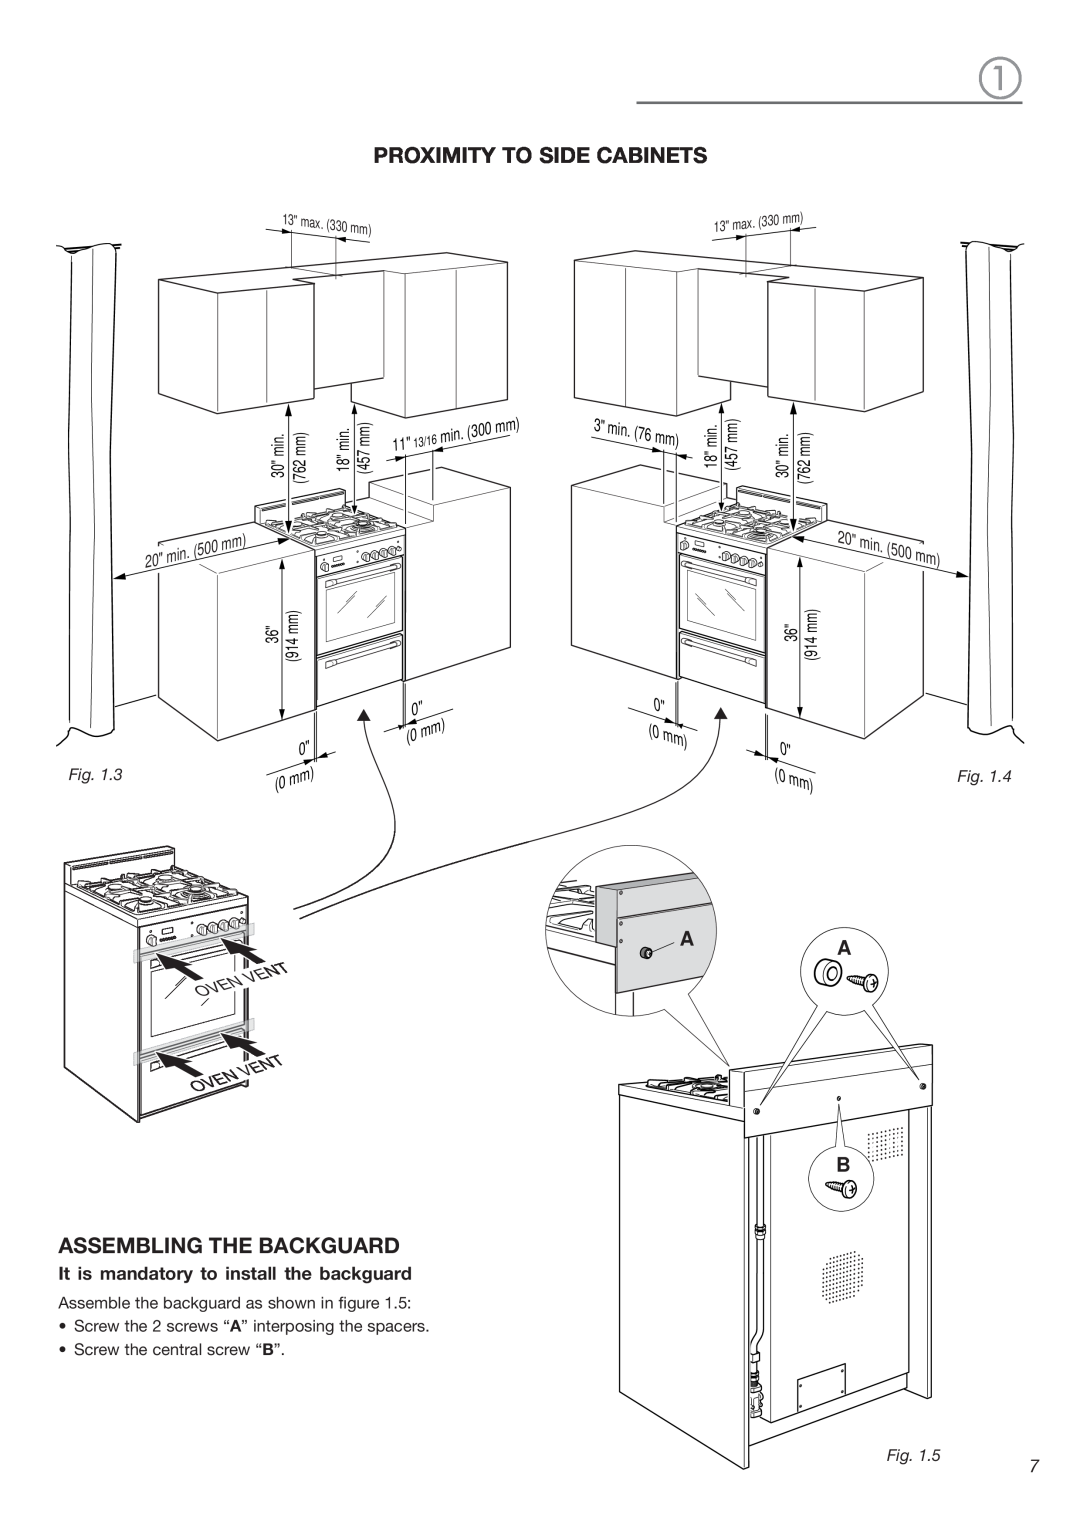 DeLonghi DEGESC24SS Proximity To Side Cabinets, Assembling The Backguard, Aa B, 0 0 mm, 30 min. 762 mm, 18 min. 457 mm 